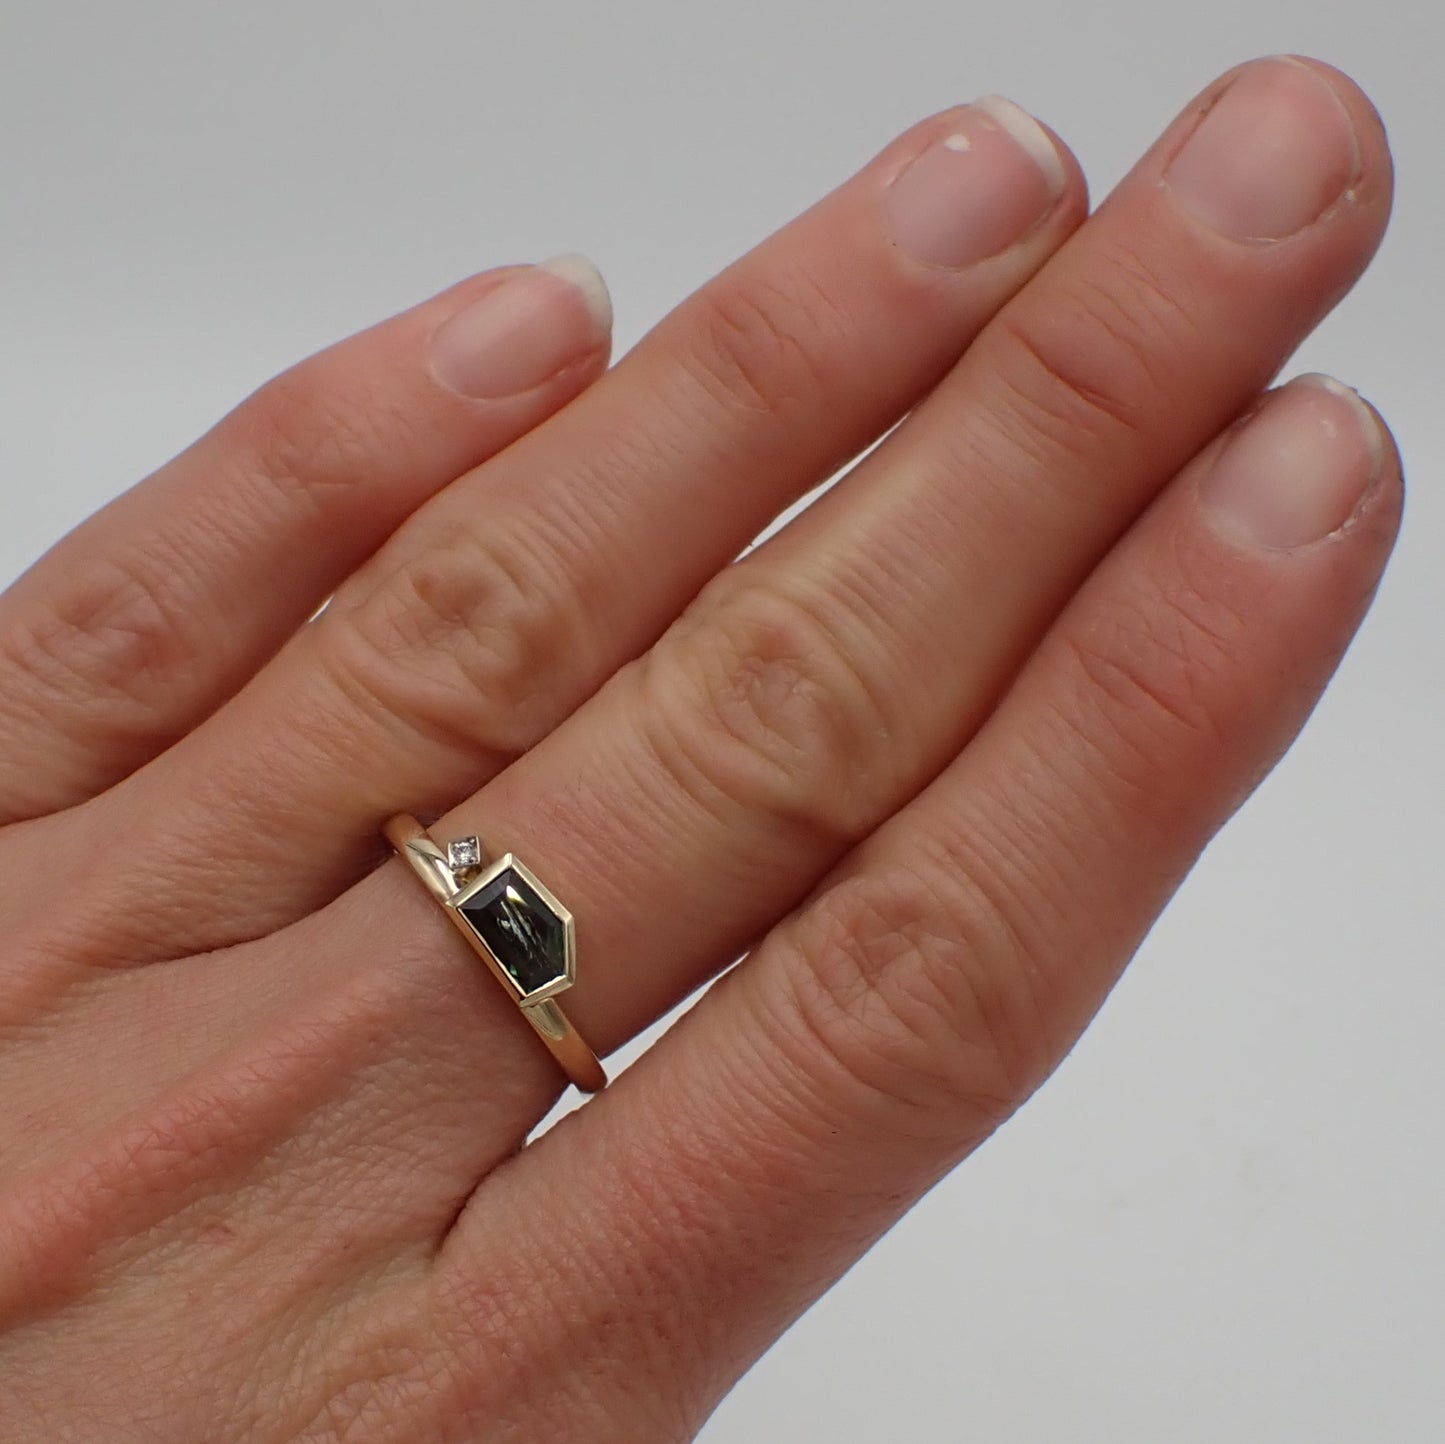 Sapphire and Diamond Engagement Ring - Freeform